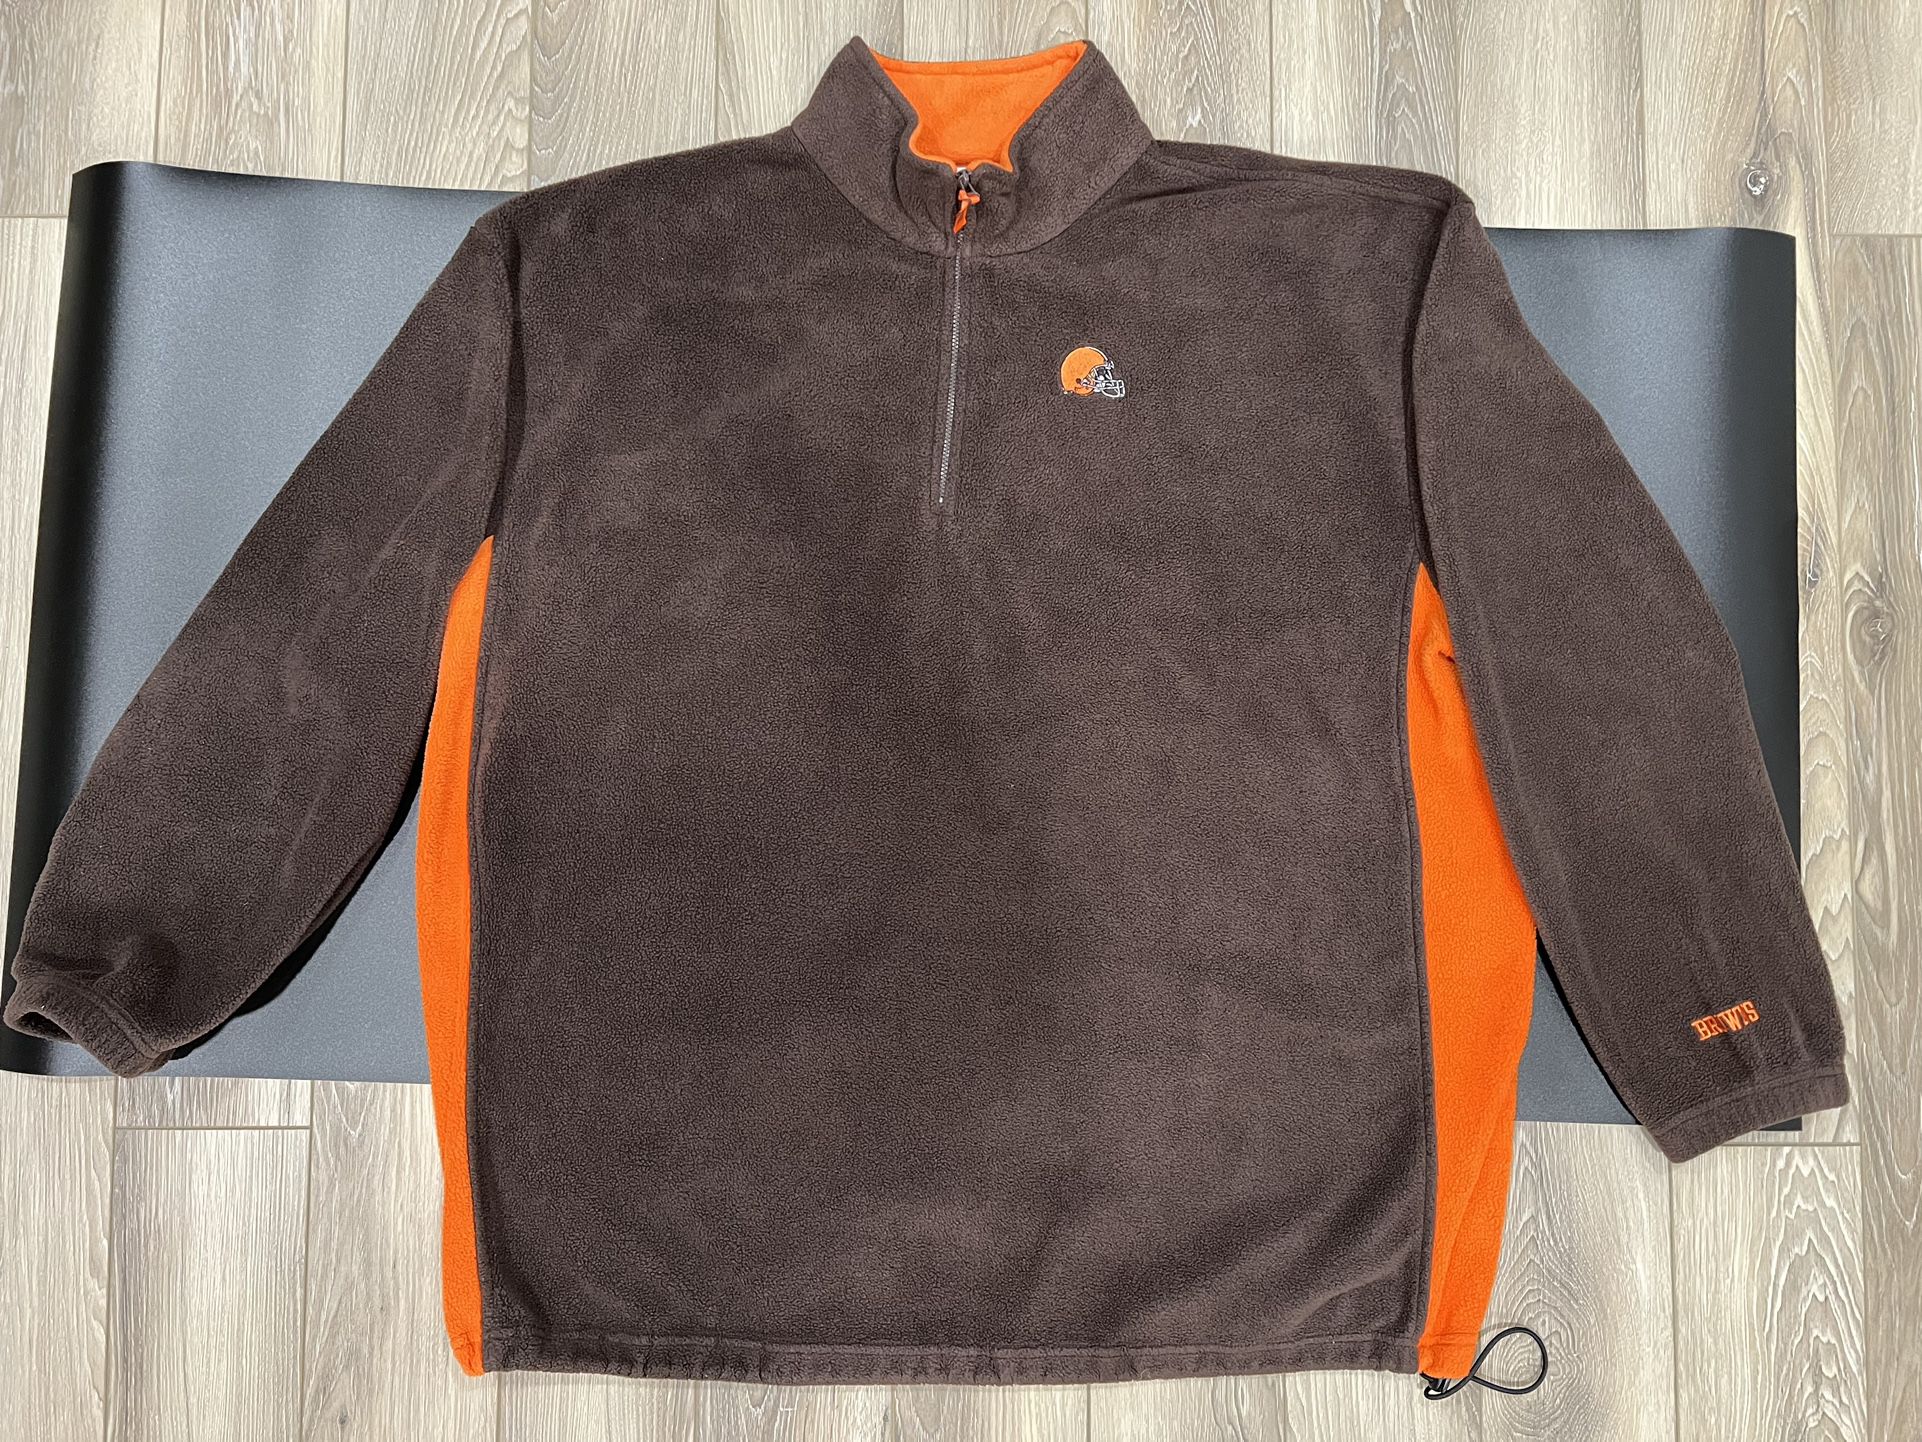 Vintage Cleveland Browns Quarter Zip Sweater NFL Fleece Men’s 3XL